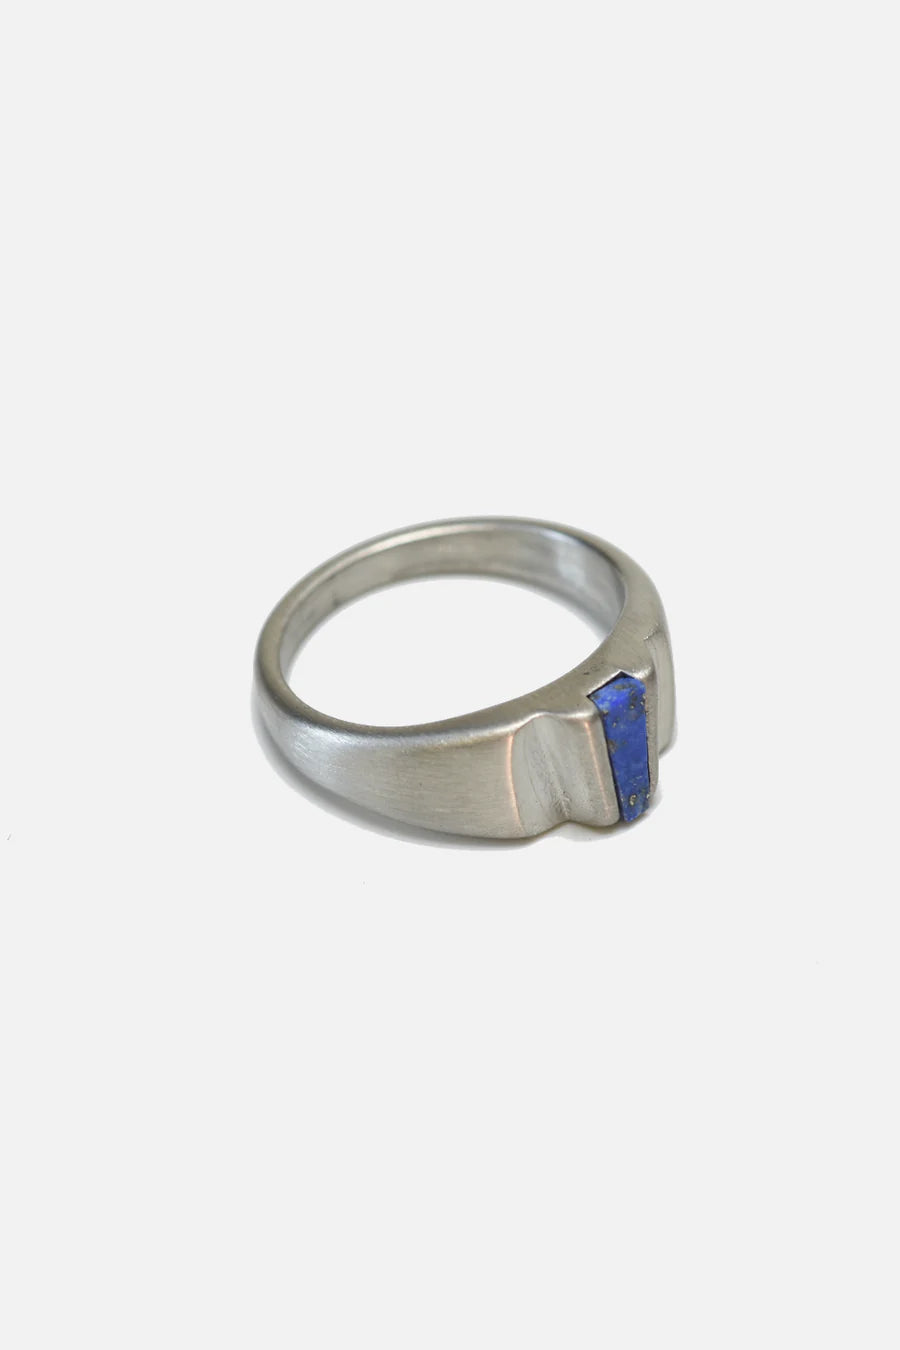 Curated Basics Lapis Lazuli Inlay Ring Jewelry Accessories stone 